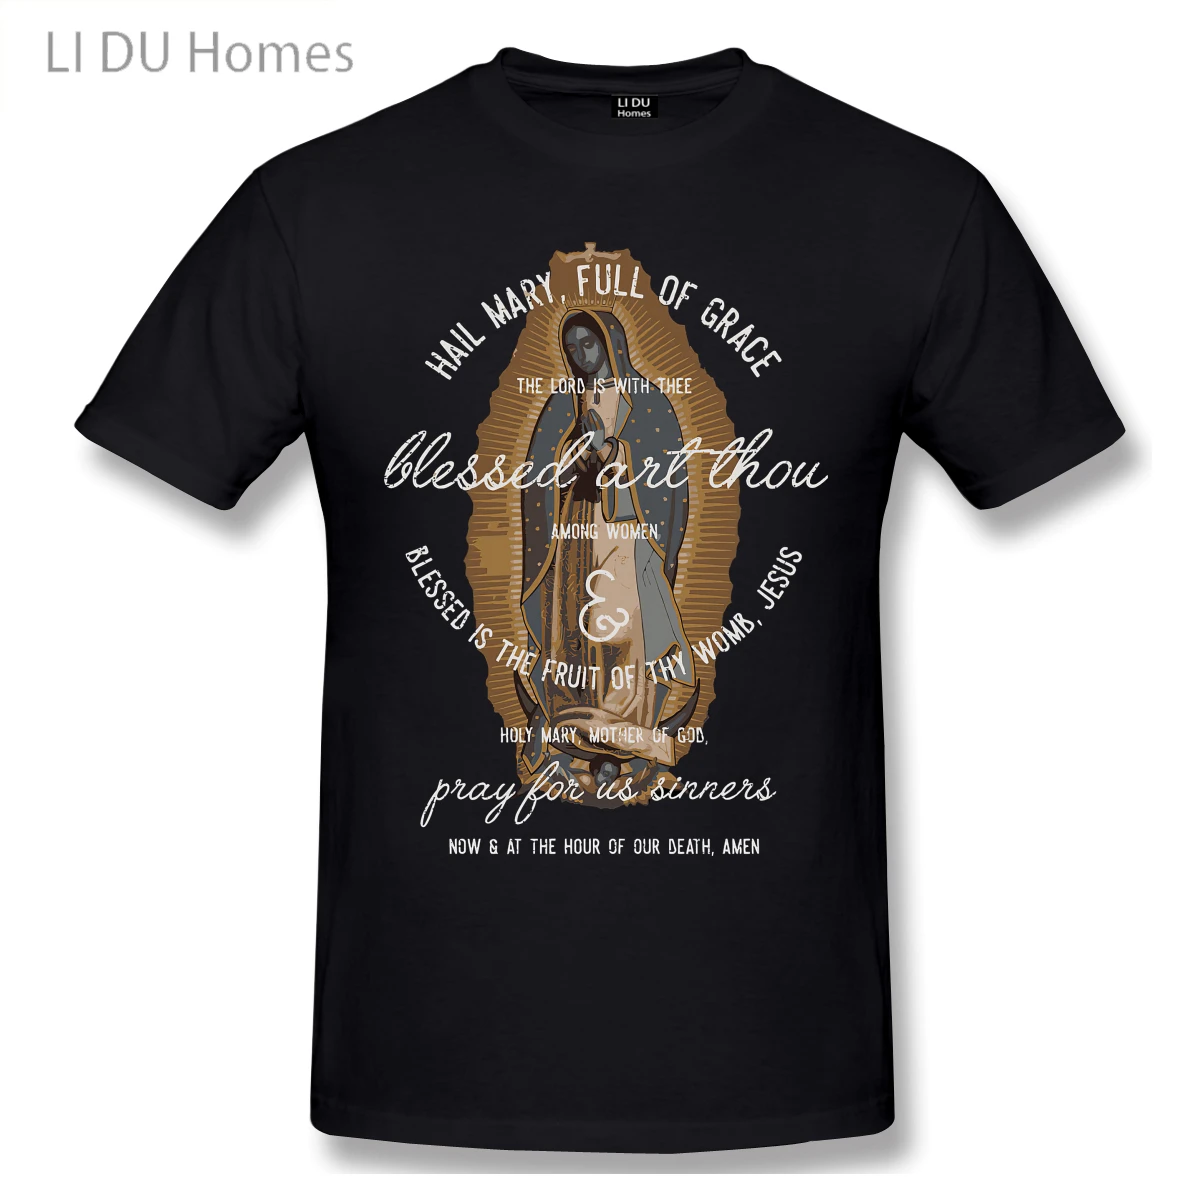 

LIDU Our Lady Of Guadalupe Hail Mary Prayer Catholic Gift T shirt man T Shirt Woman